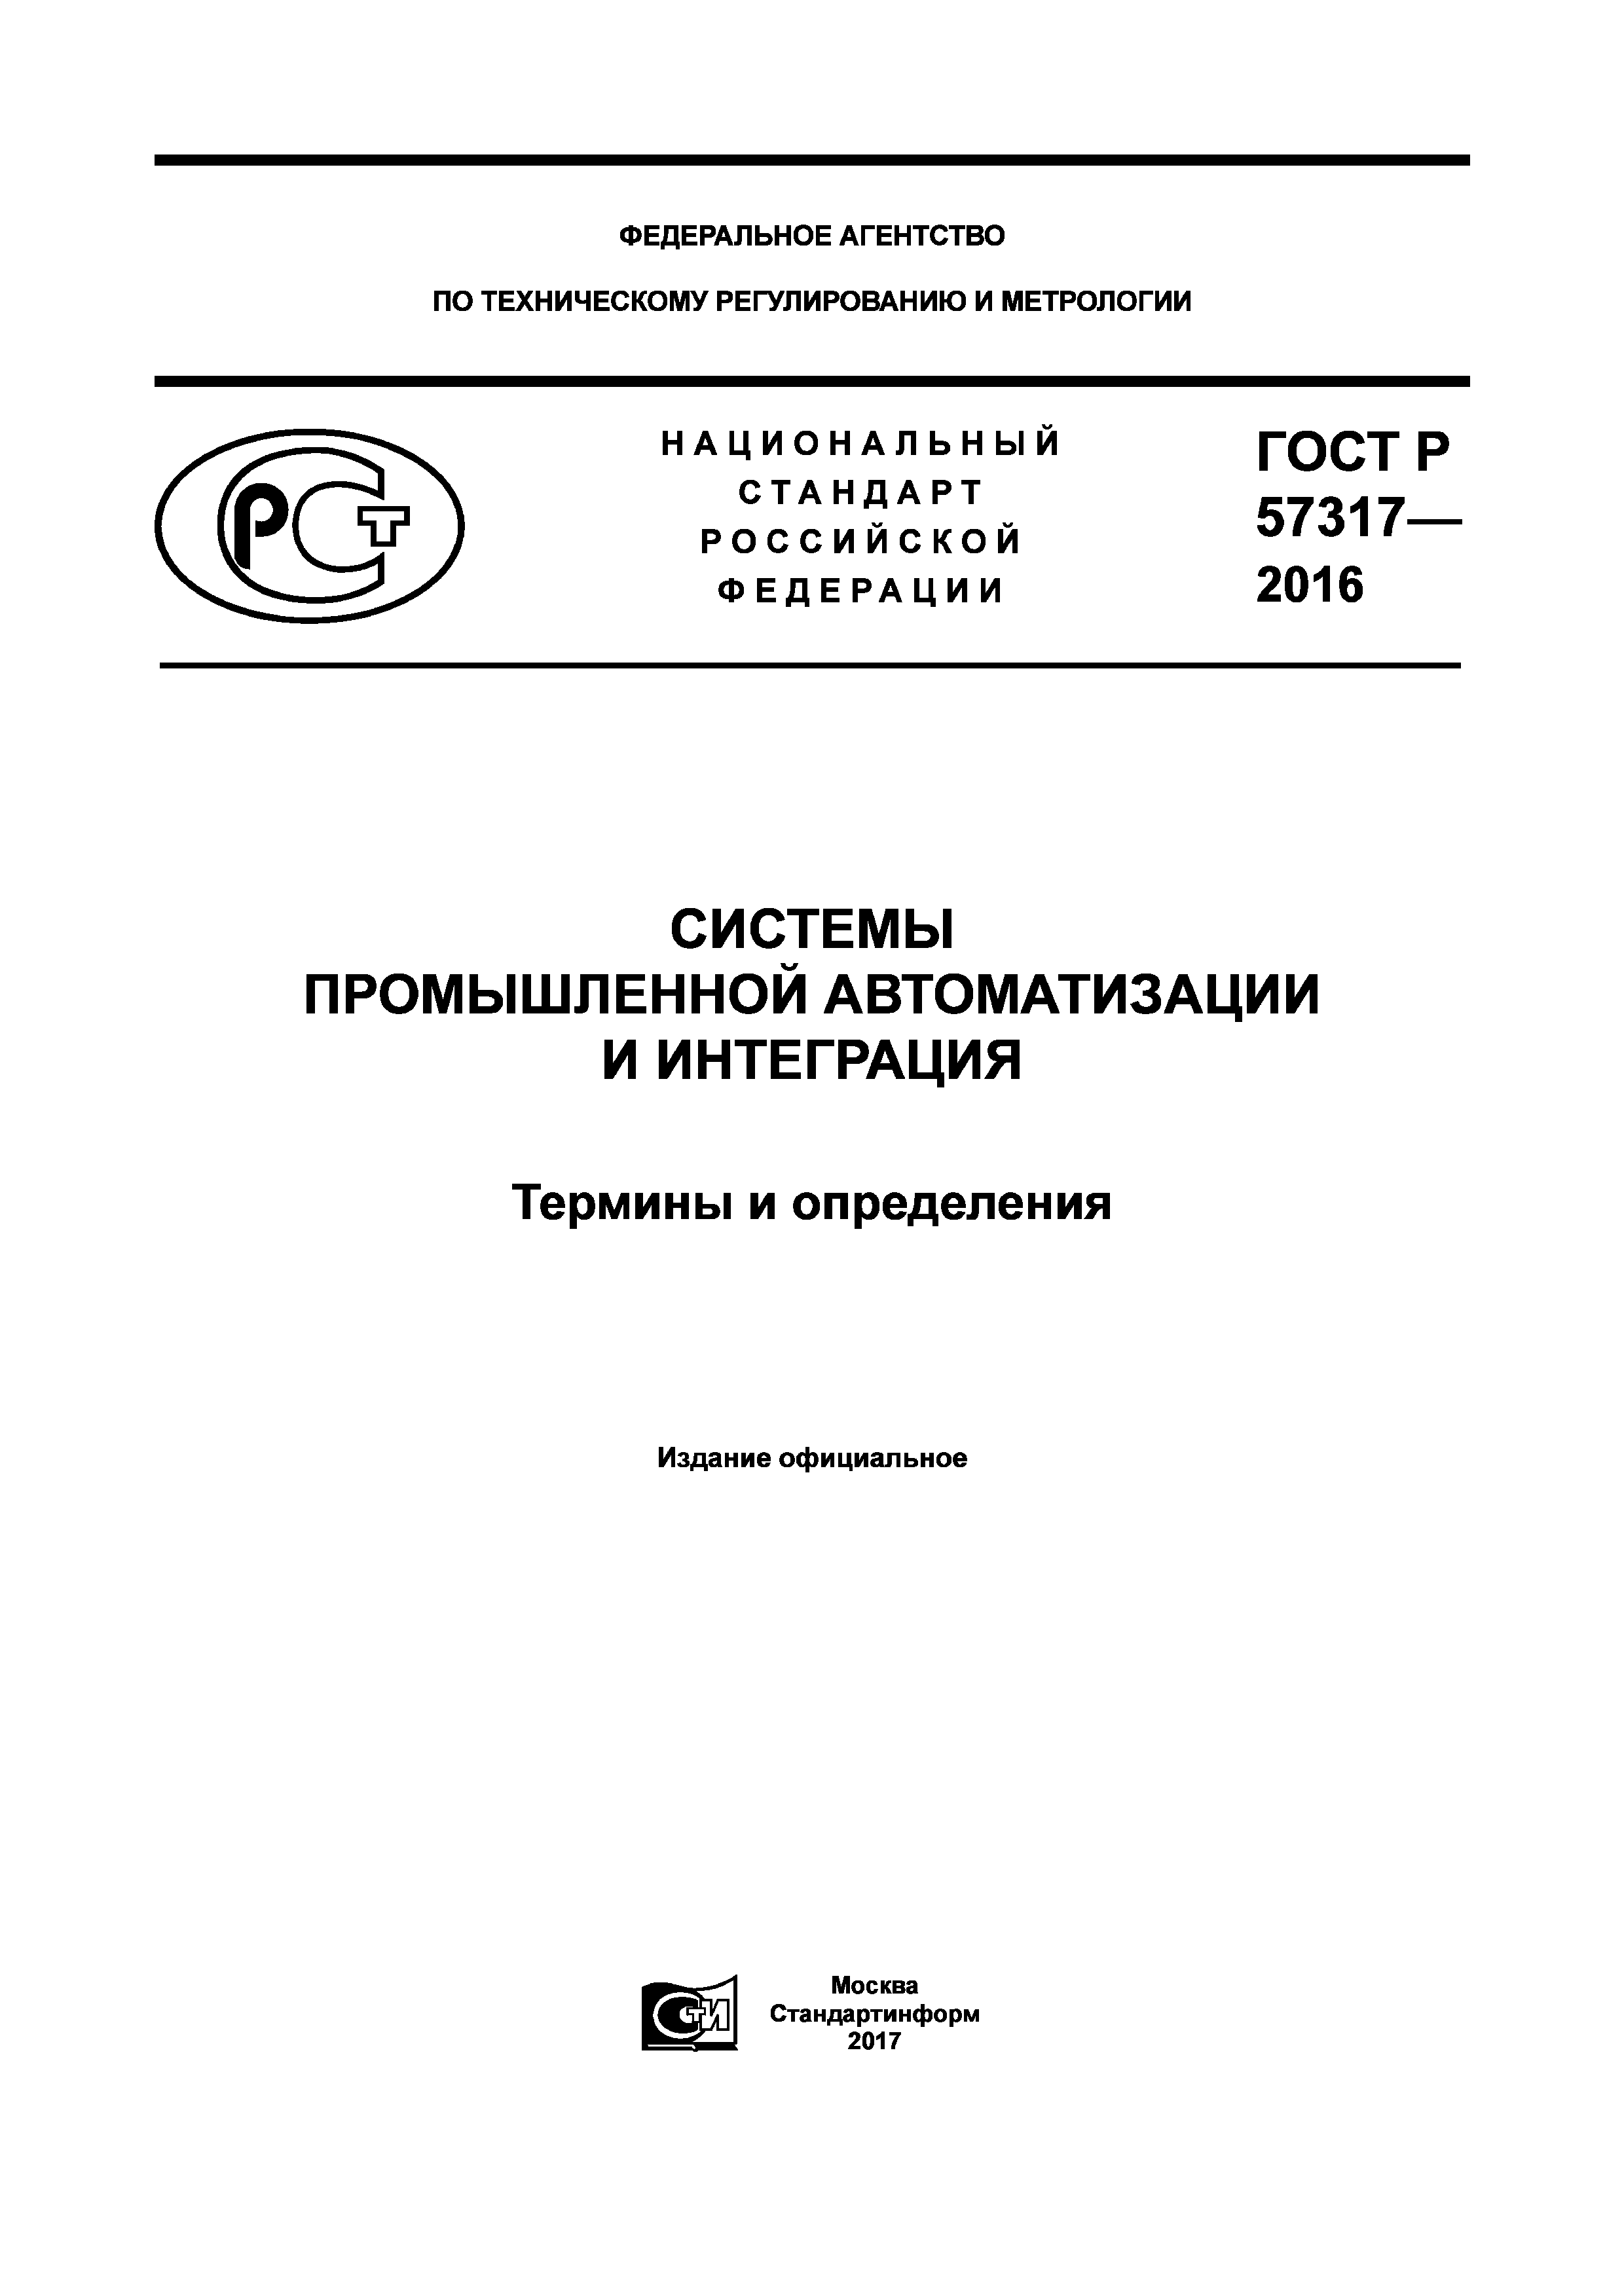 ГОСТ Р 57317-2016